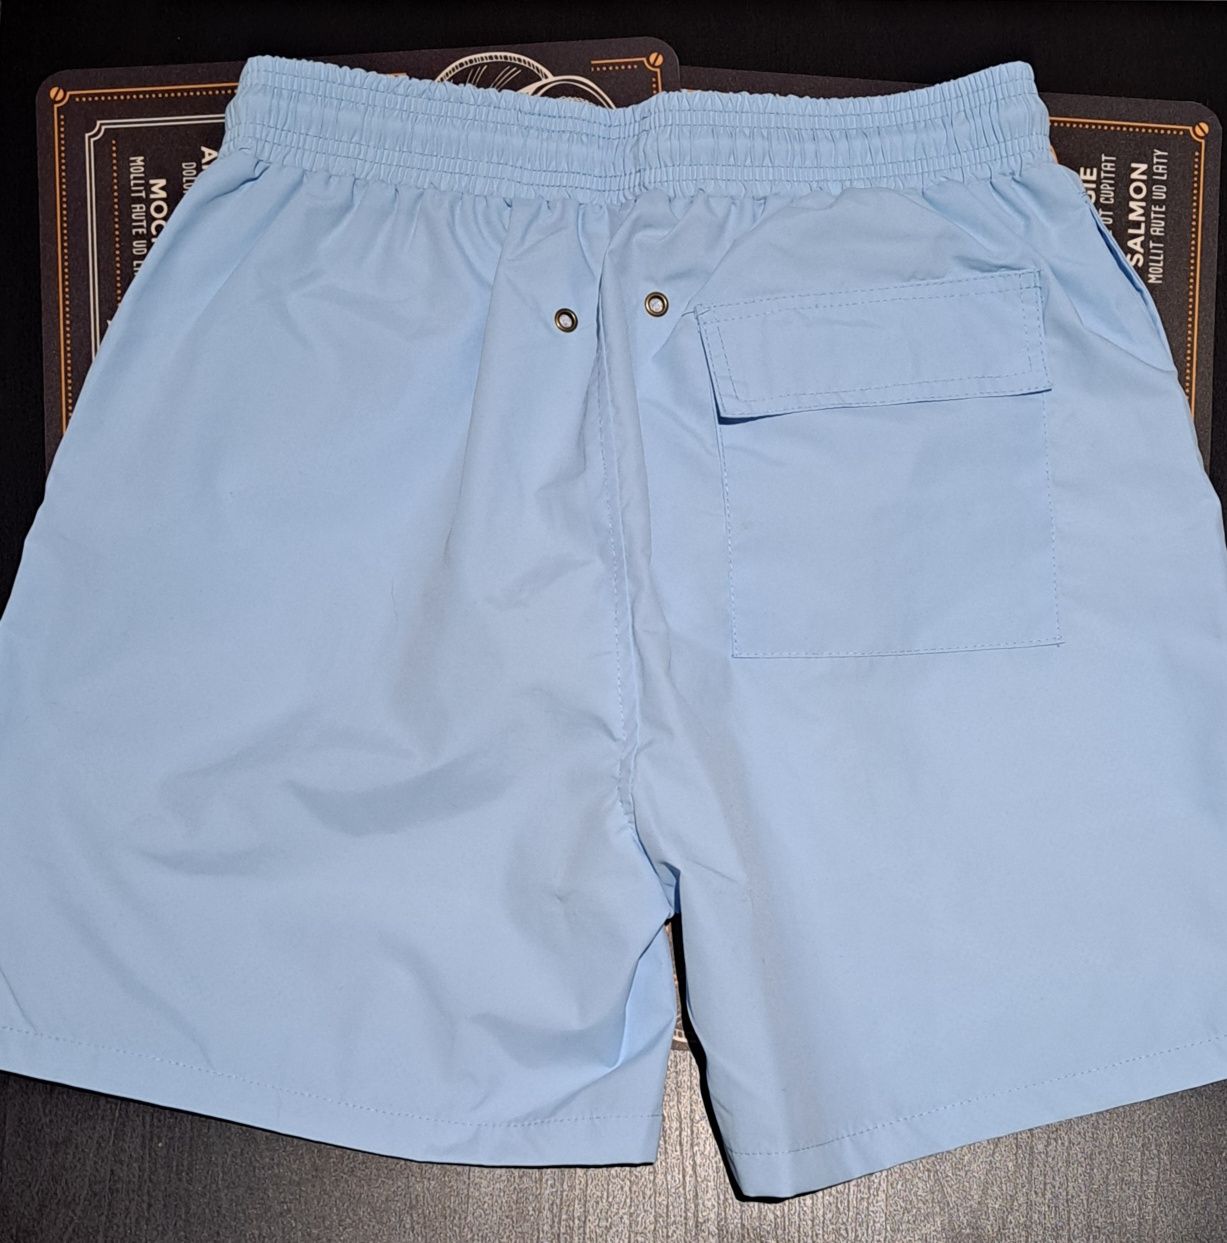 Polo, Ralph Lauren Бански шорти, М, светло сини